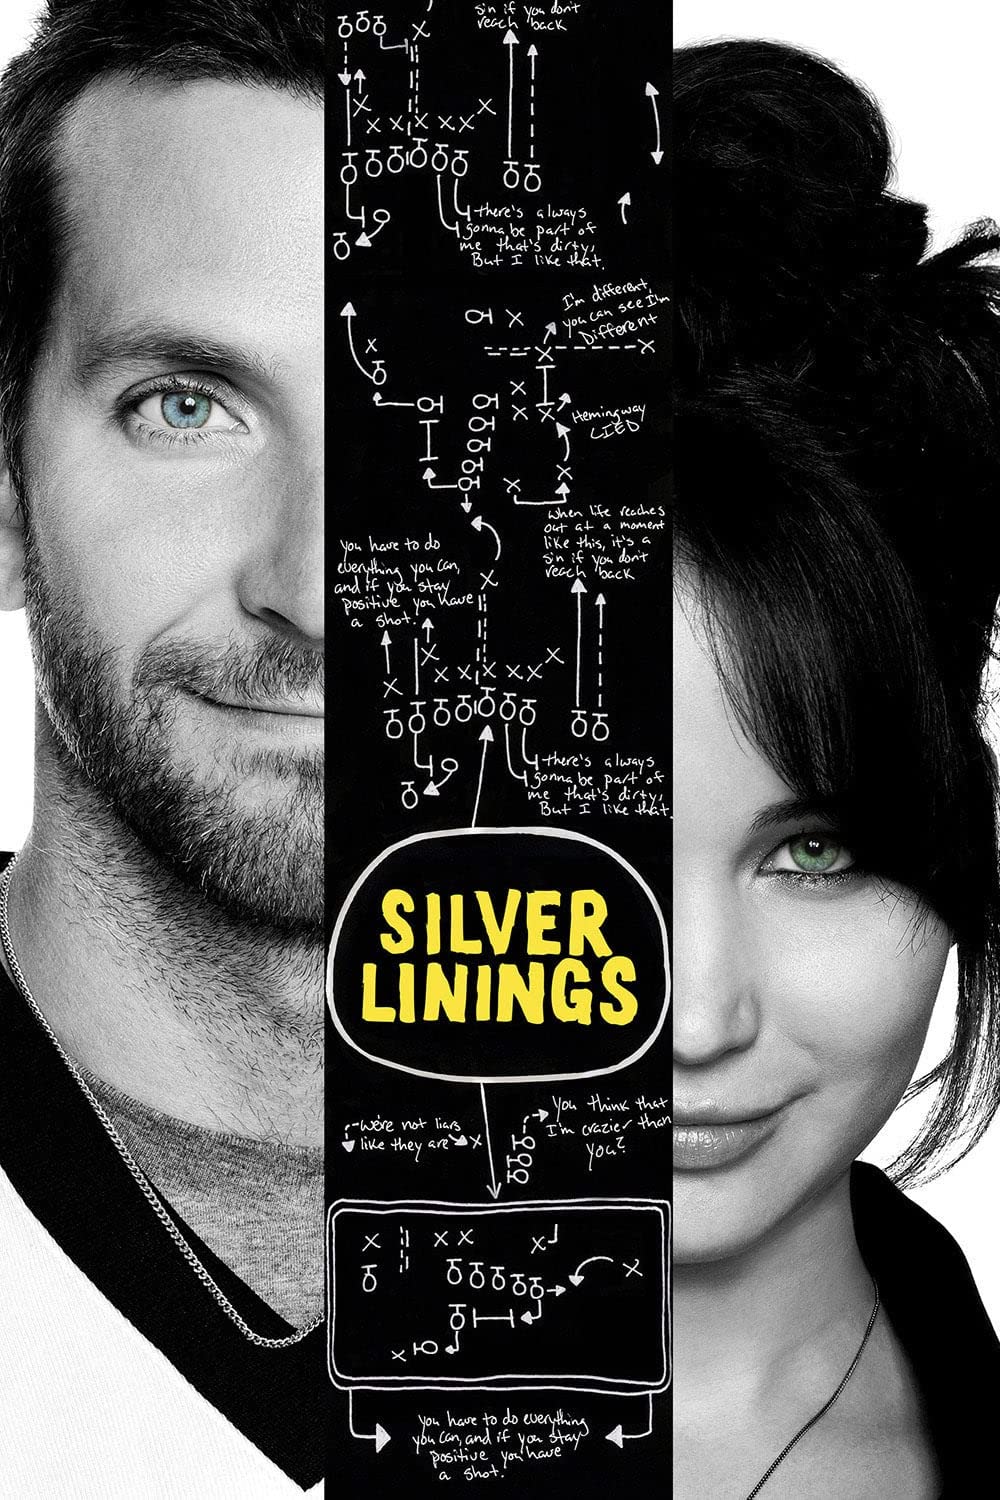 Filmbeschreibung zu Silver Linings (OV)